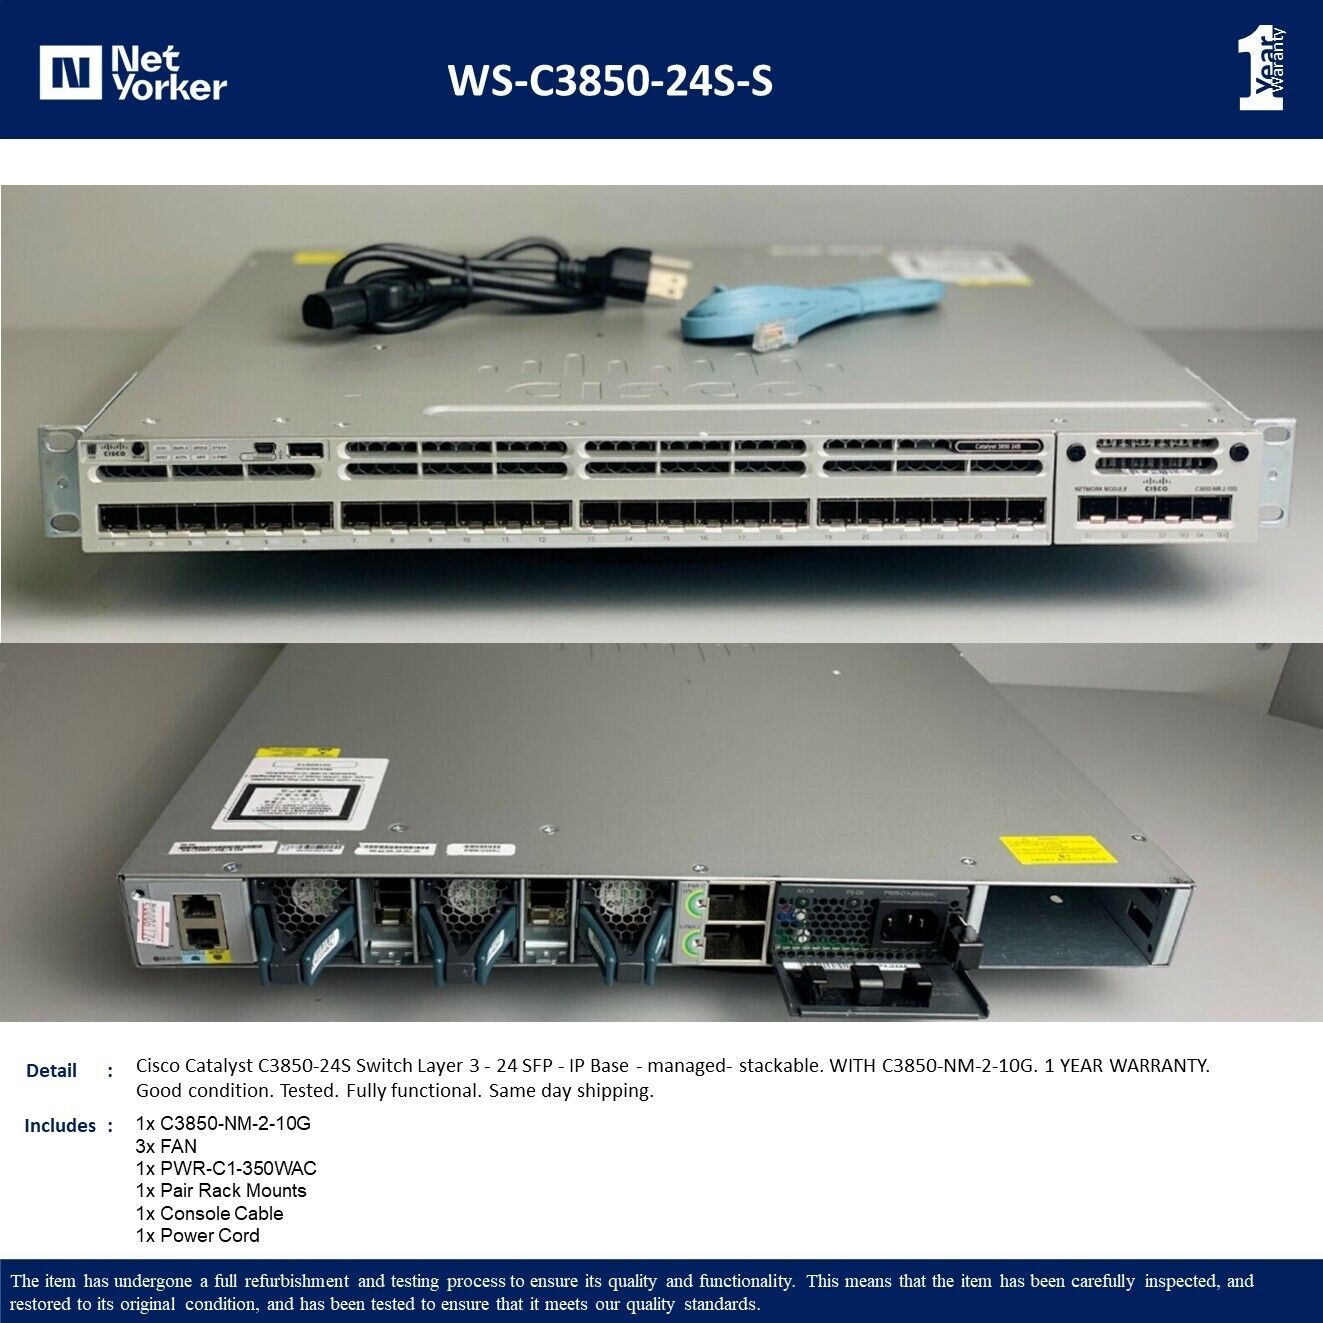 Cisco WS-C3850-24S-S 24 Port IP Base Switch - W/ 10G - Same Day Shipping